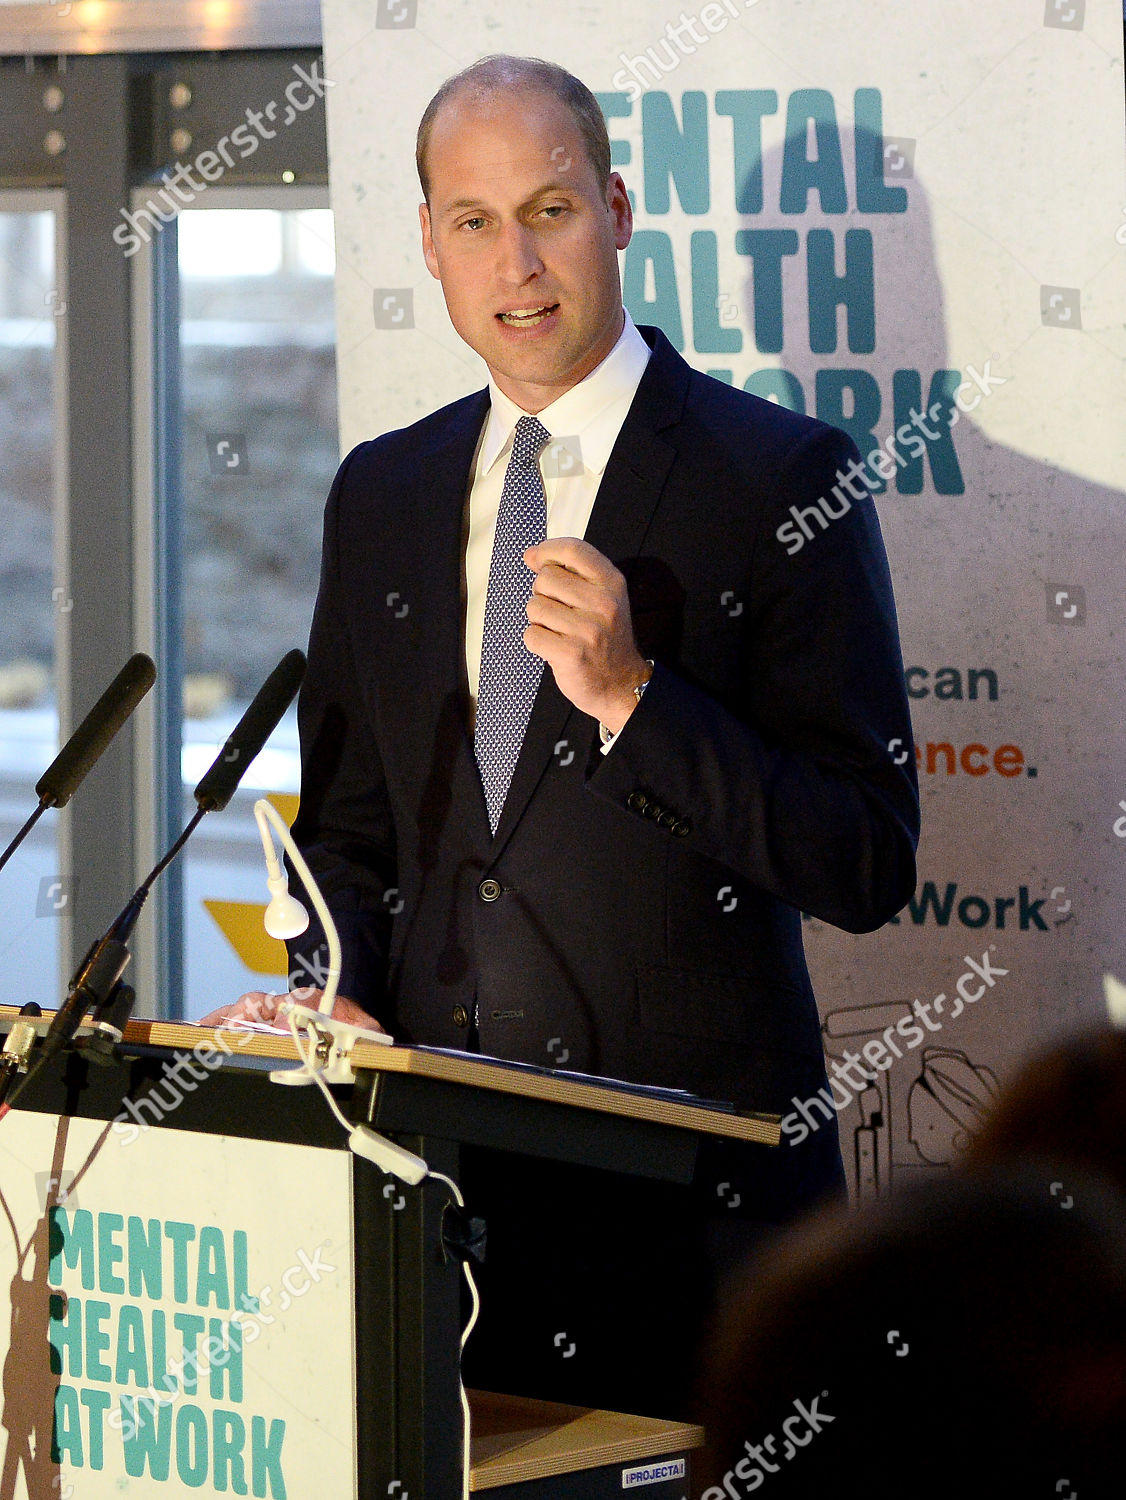 mental-health-at-work-initiative-launch-bristol-uk-shutterstock-editorial-9879247af.jpg